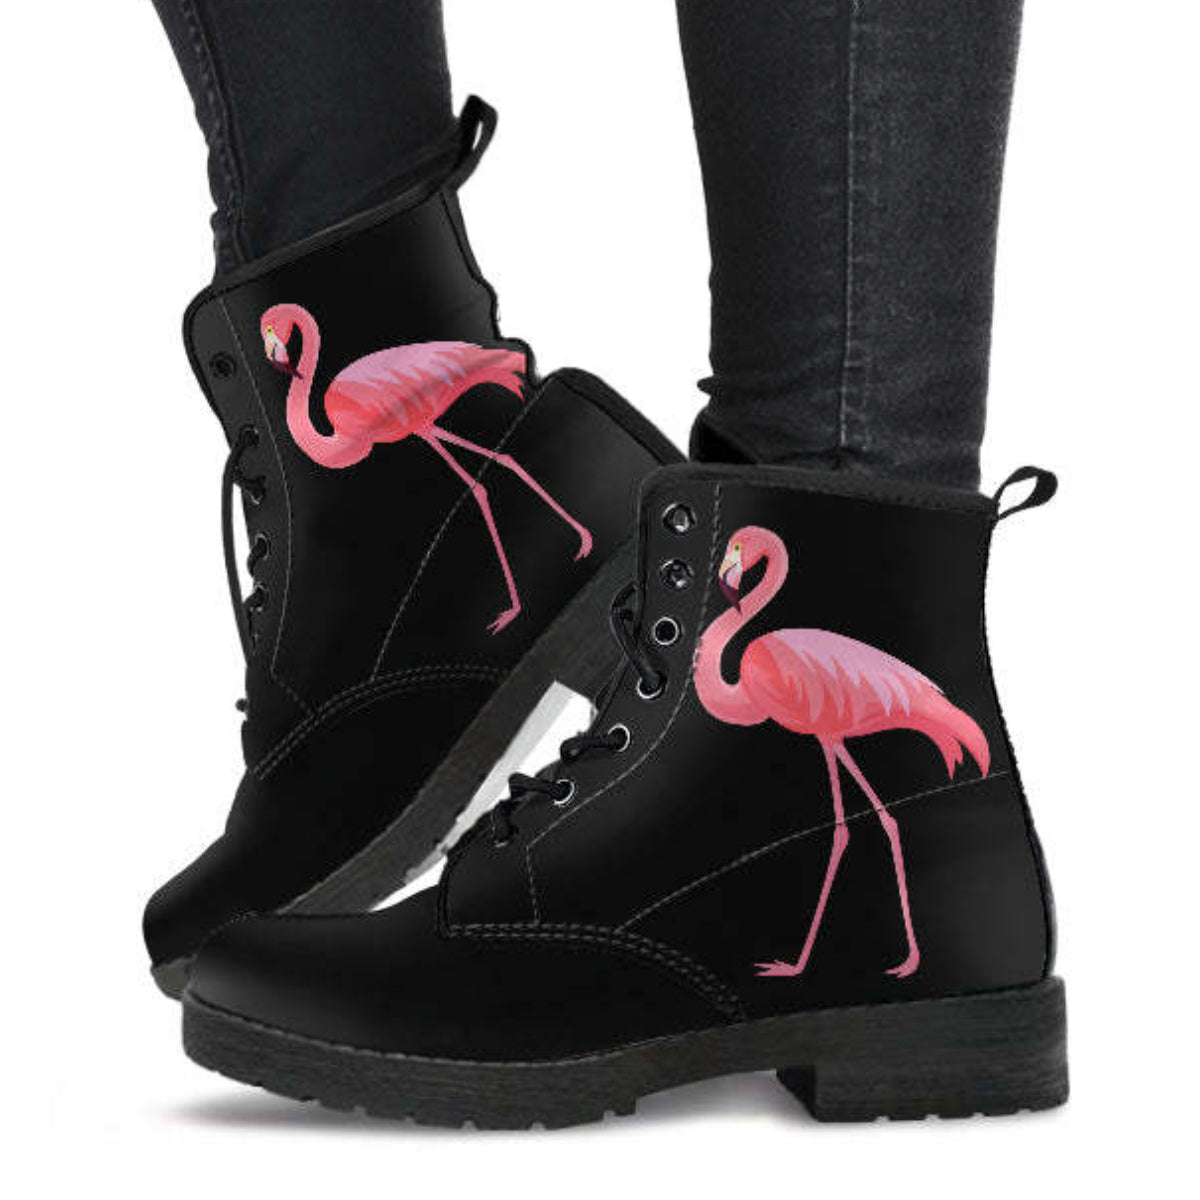 Flamingo Leather Boots The Popular Flamingo